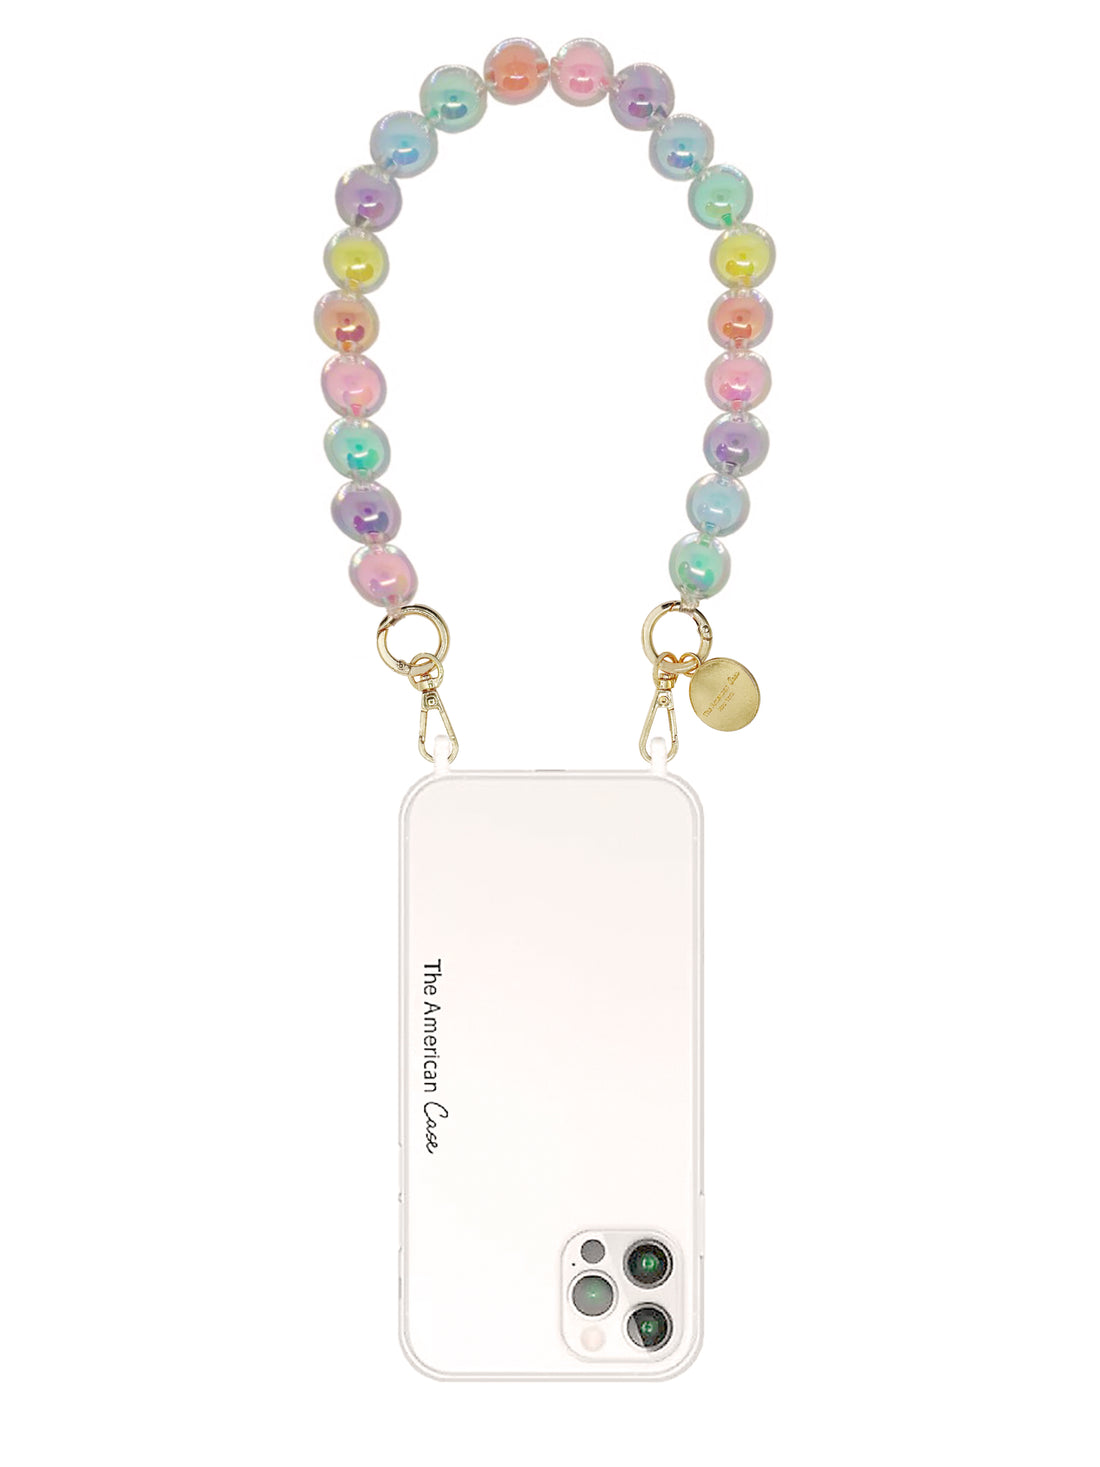 Rio - Macaron Rainbow Bead Bracelet Chain With Golden Carabiners